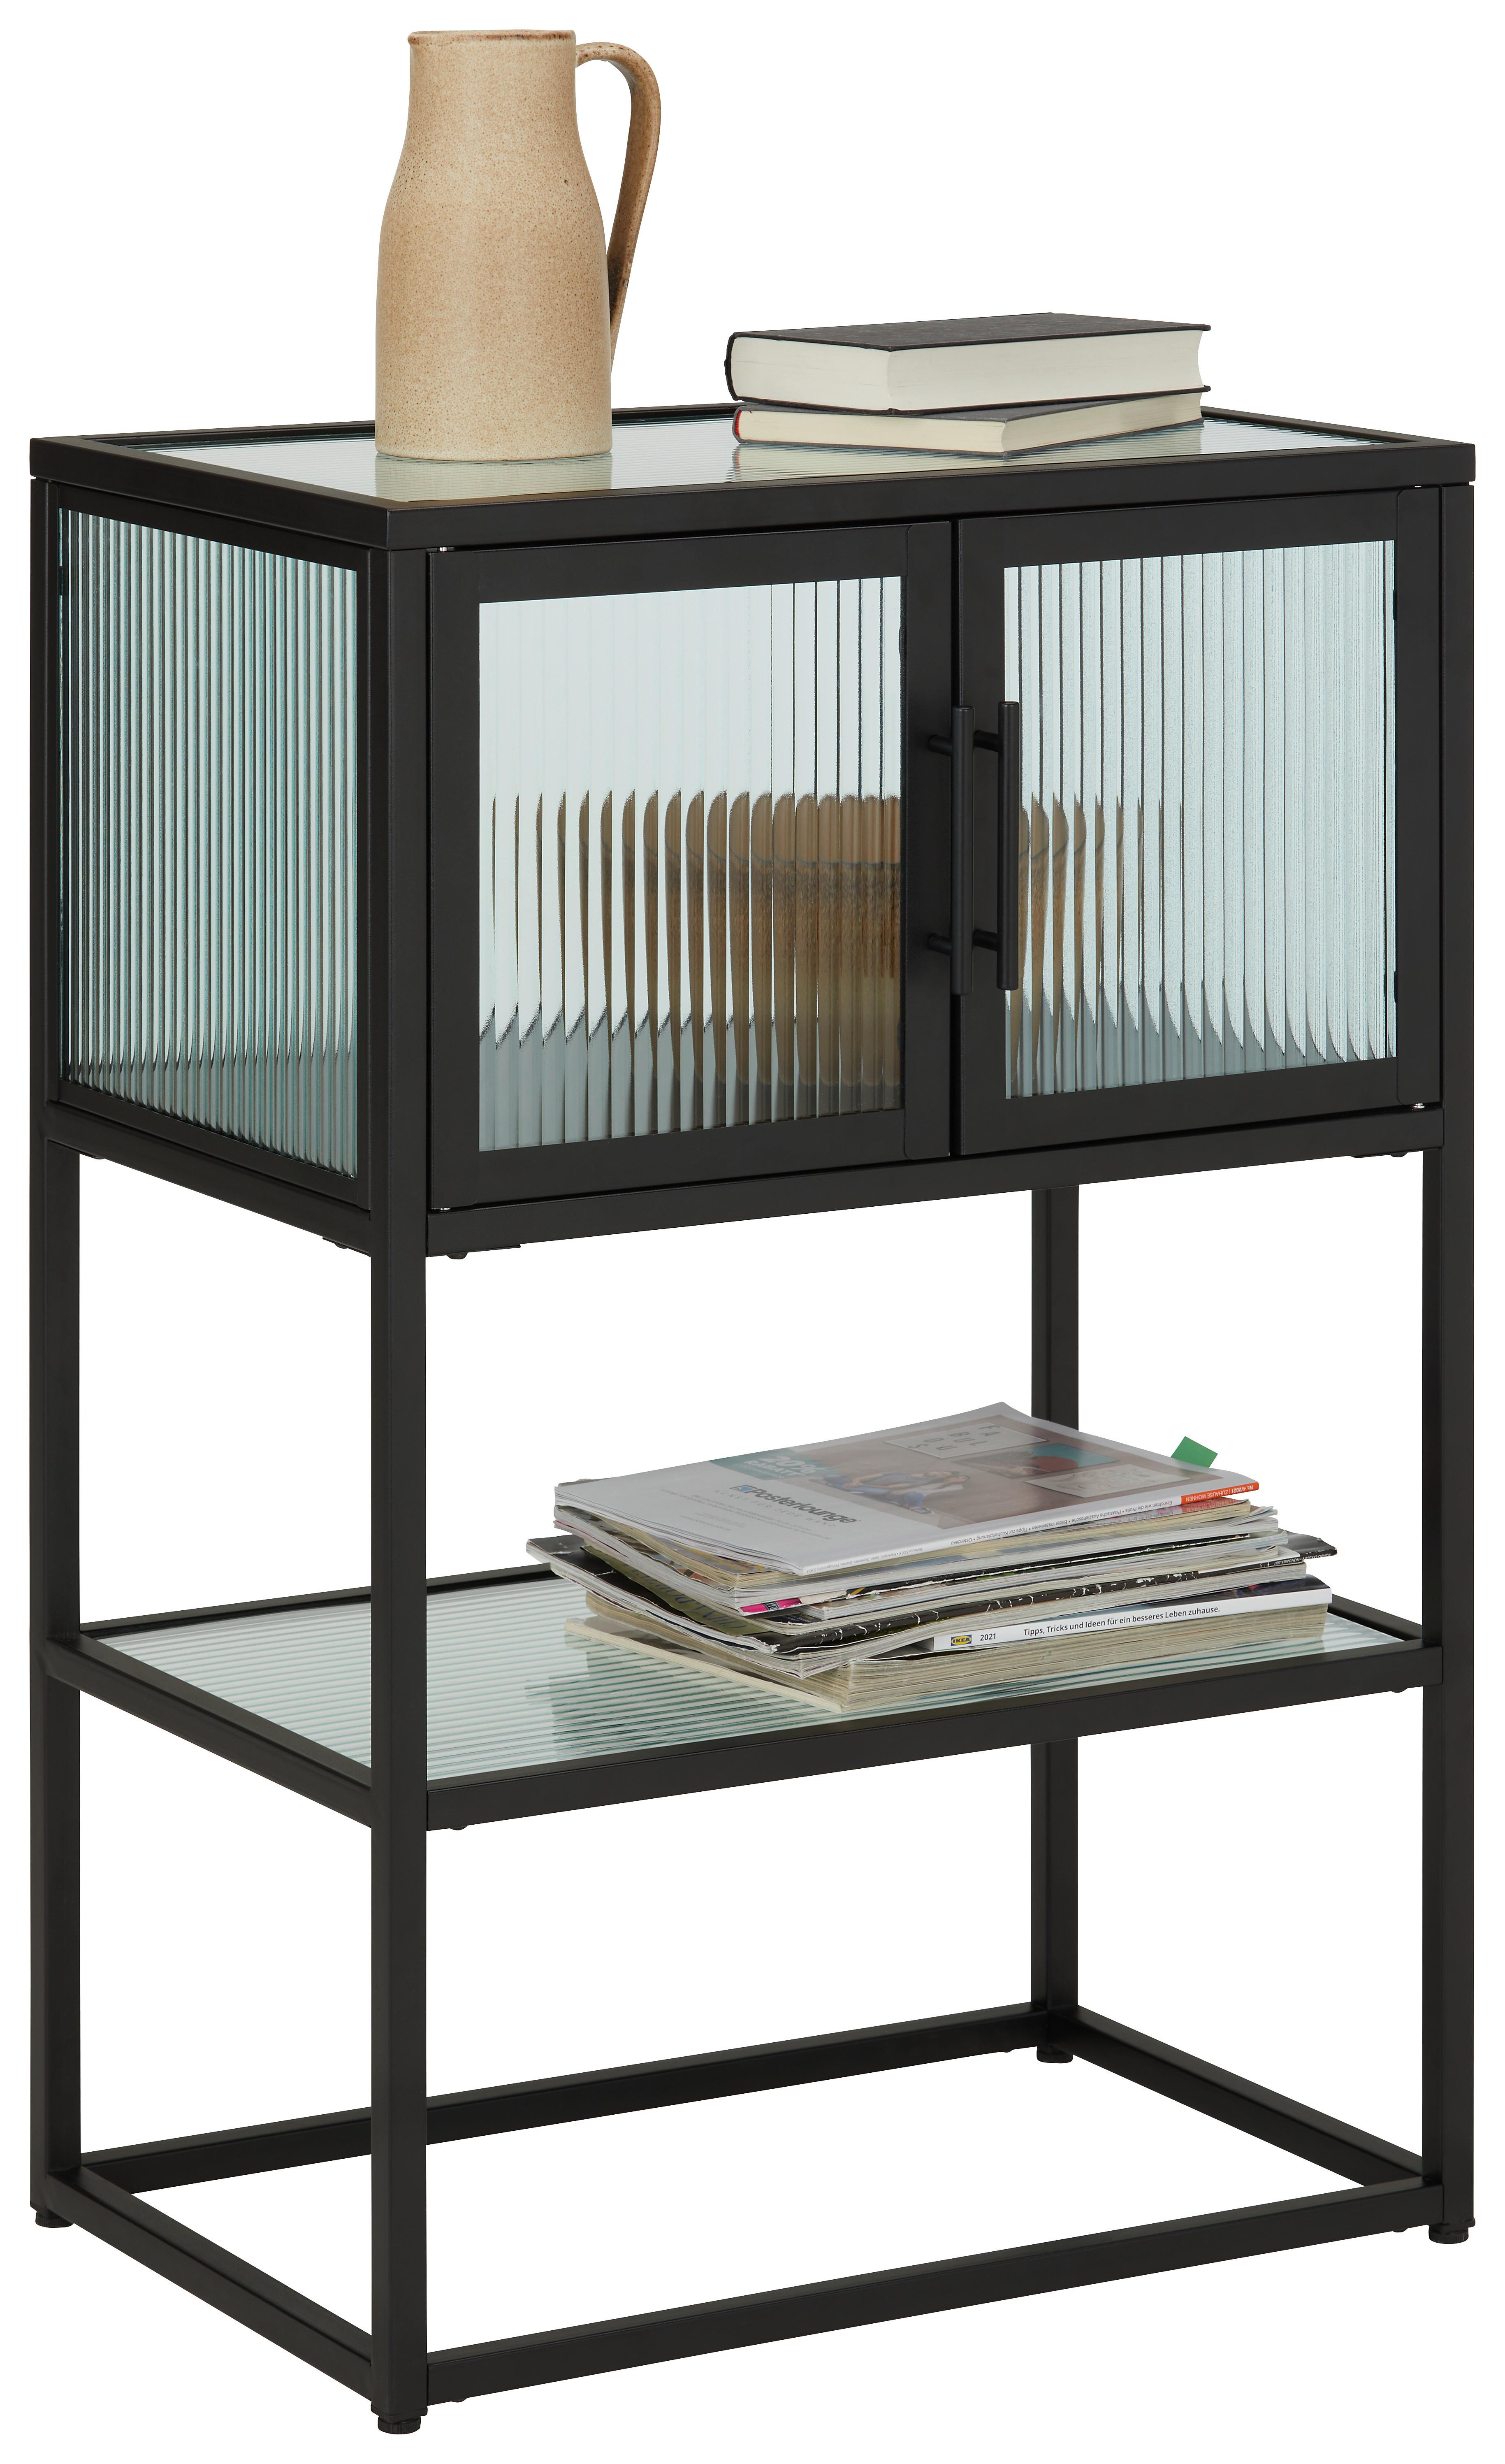 Komoda Cube -Trend- - črna/prozorno, Moderno, kovina/steklo (60/90/38cm) - Premium Living